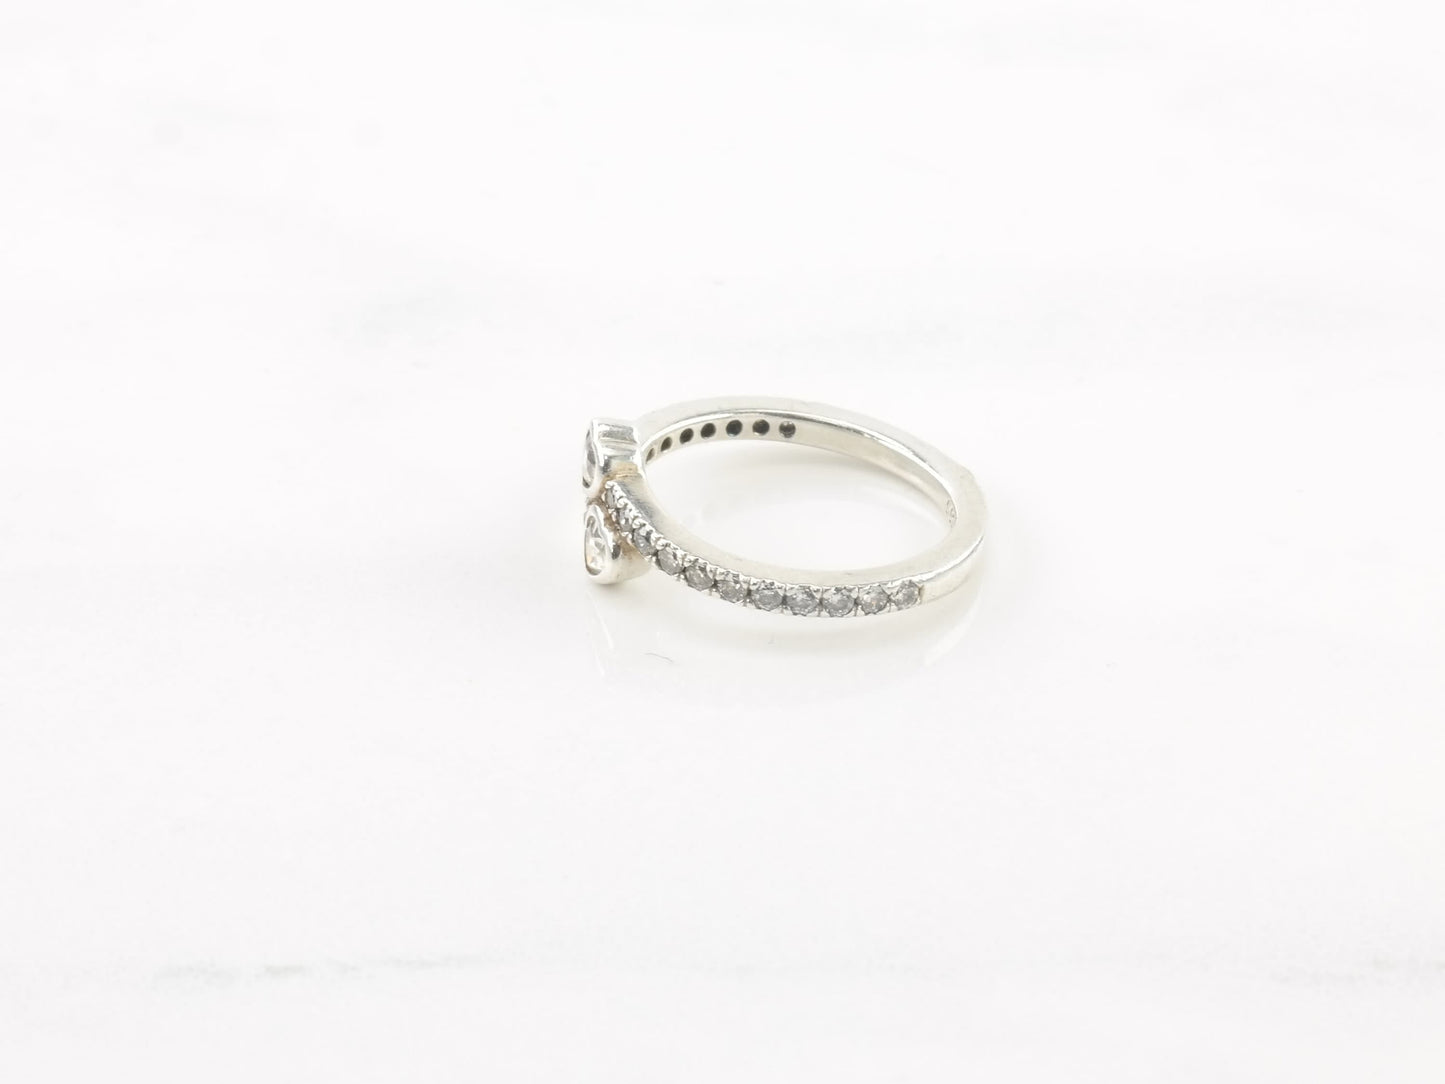 Vintage Pandora Sterling Silver Ring CZ White Diamond Heart Size 5 1/4